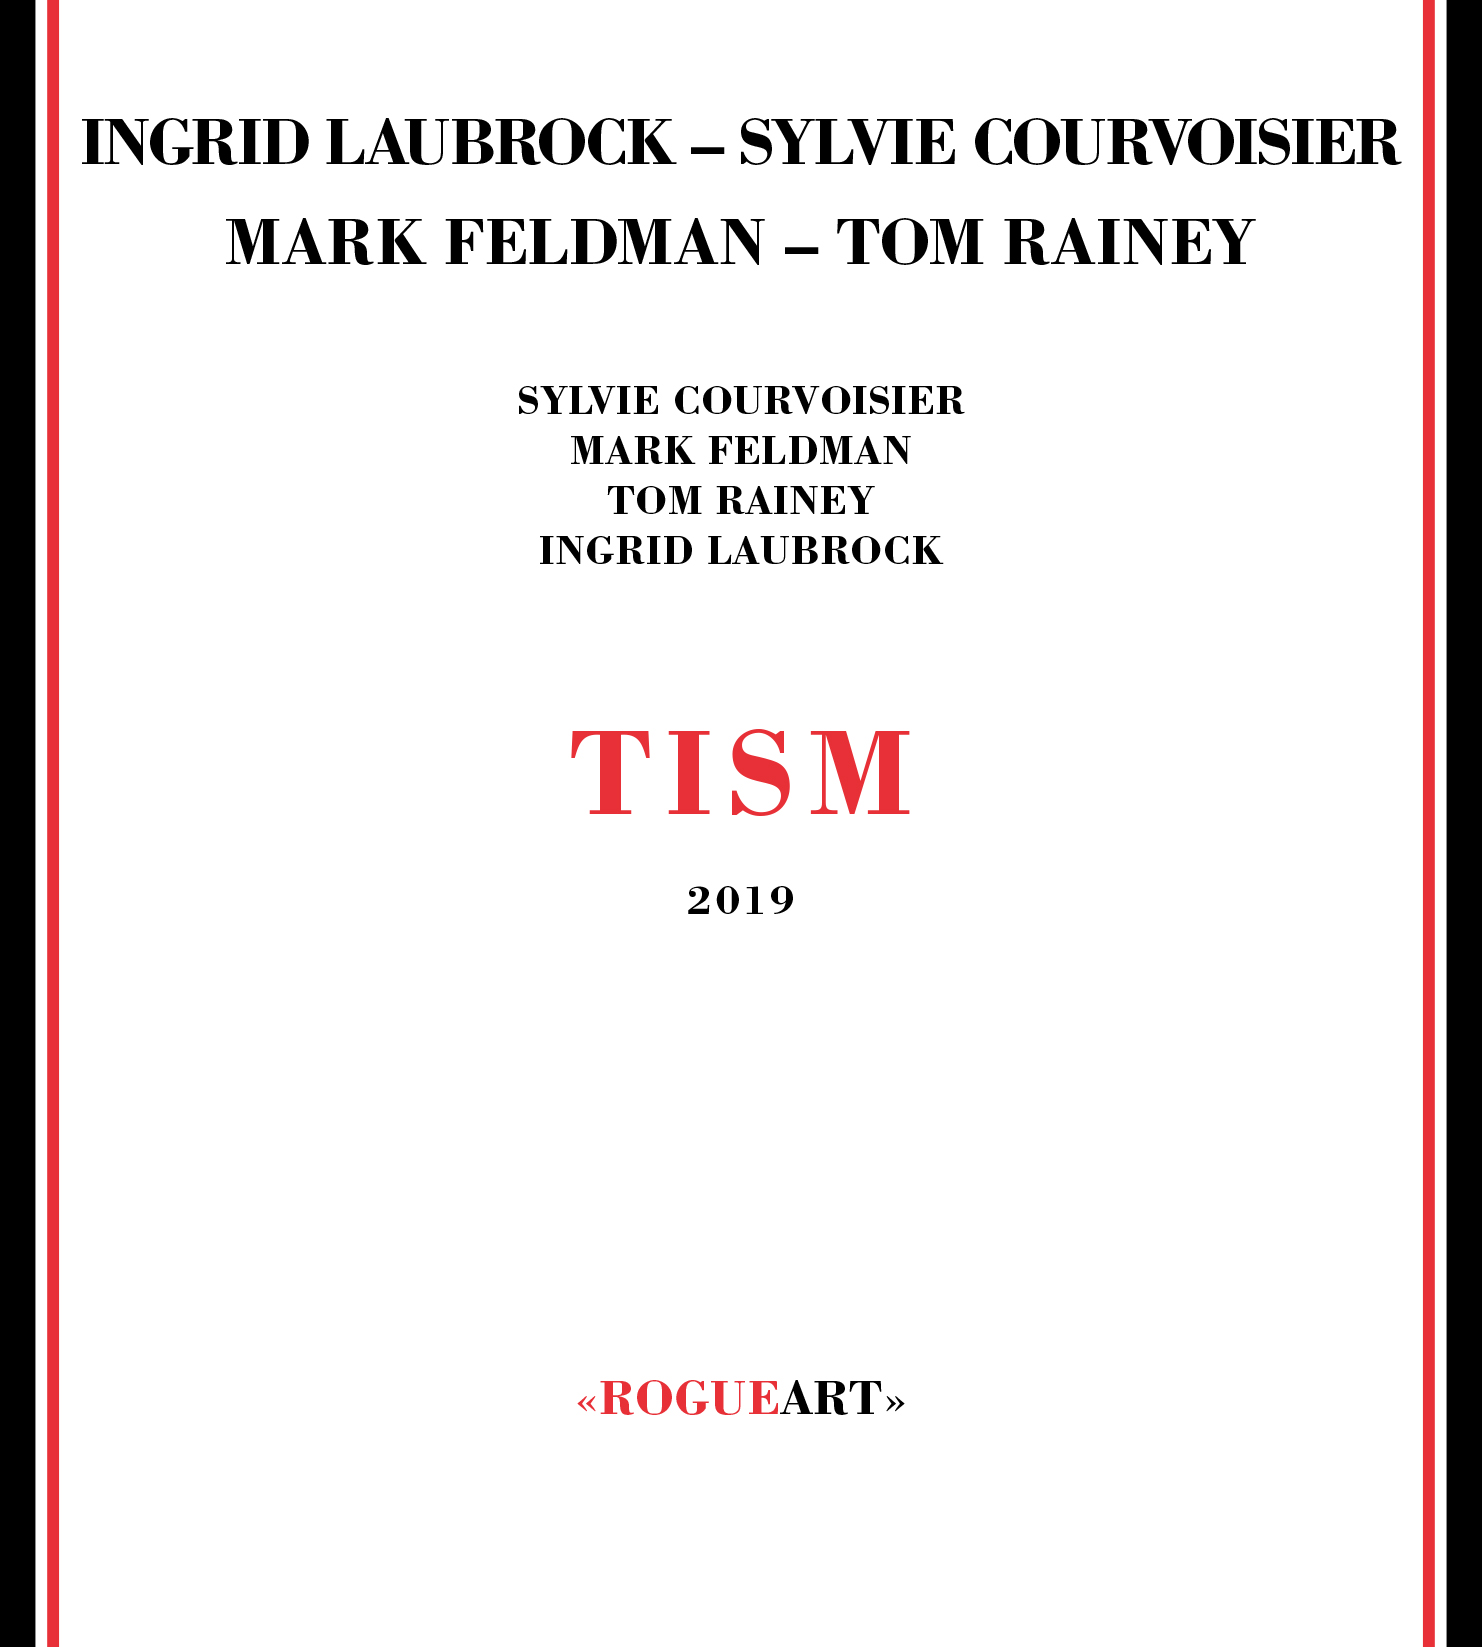 INGRID LAUBROCK - Tism cover 